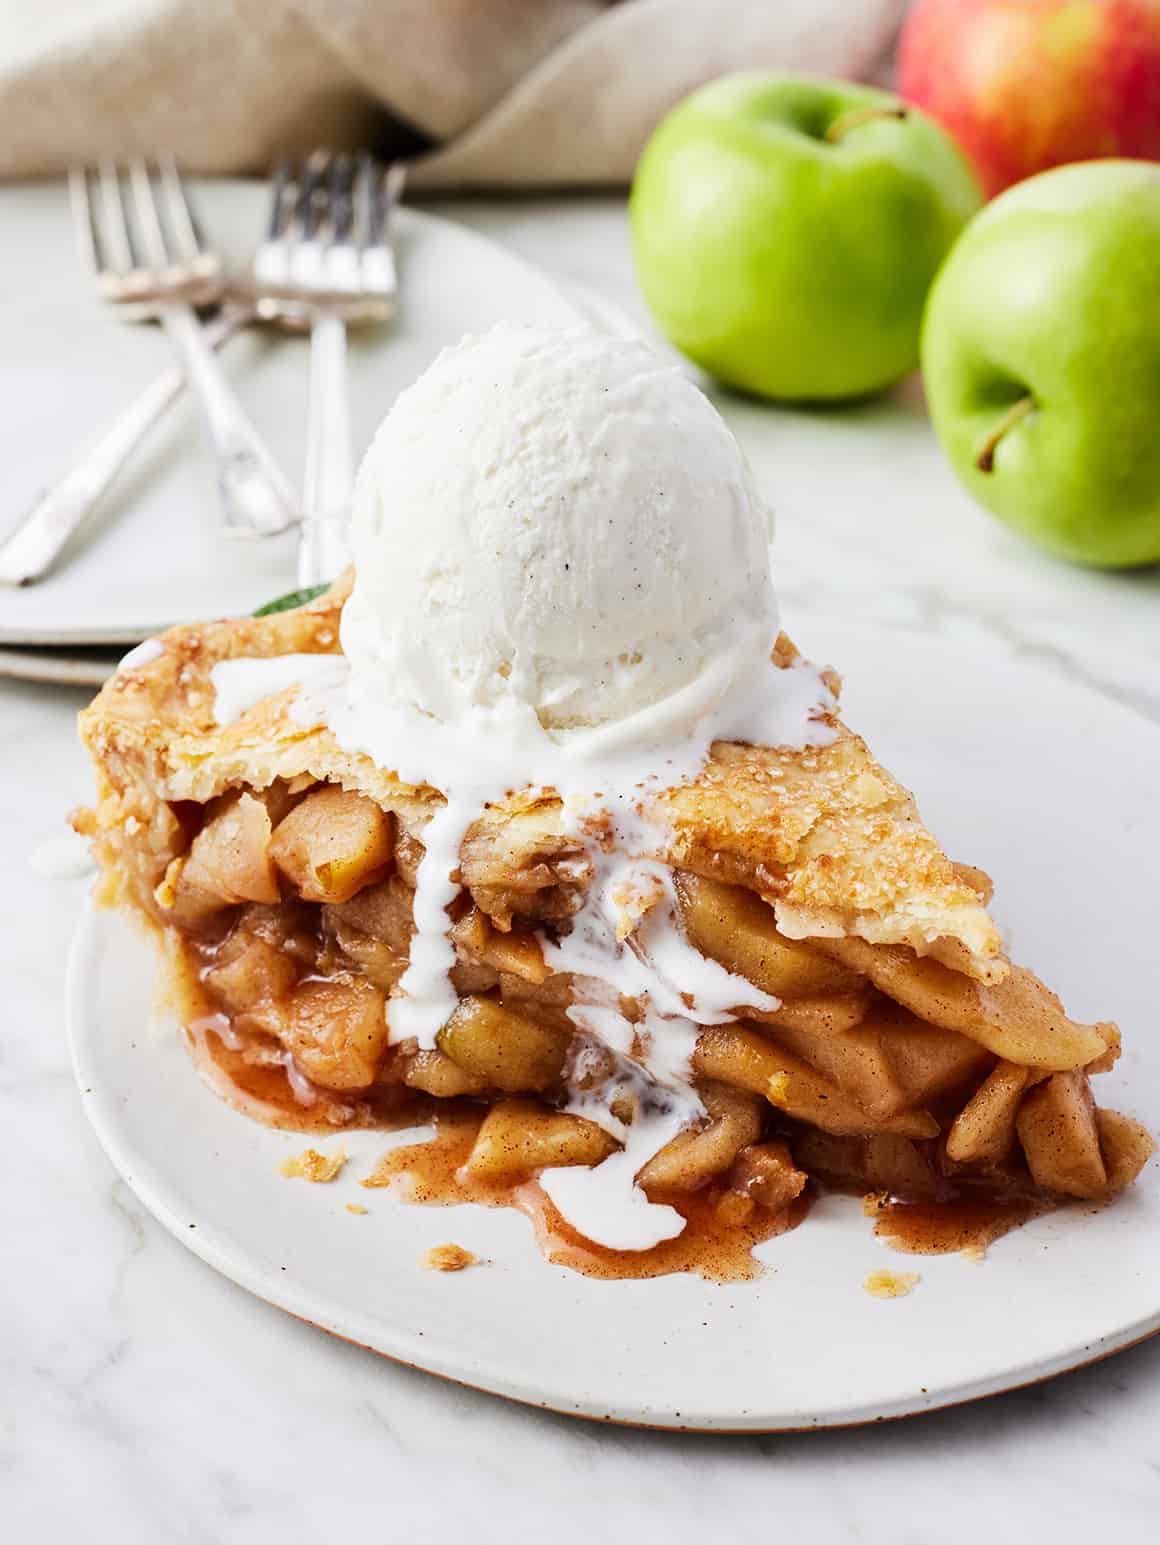 Slice of apple pie on plate with ice cream